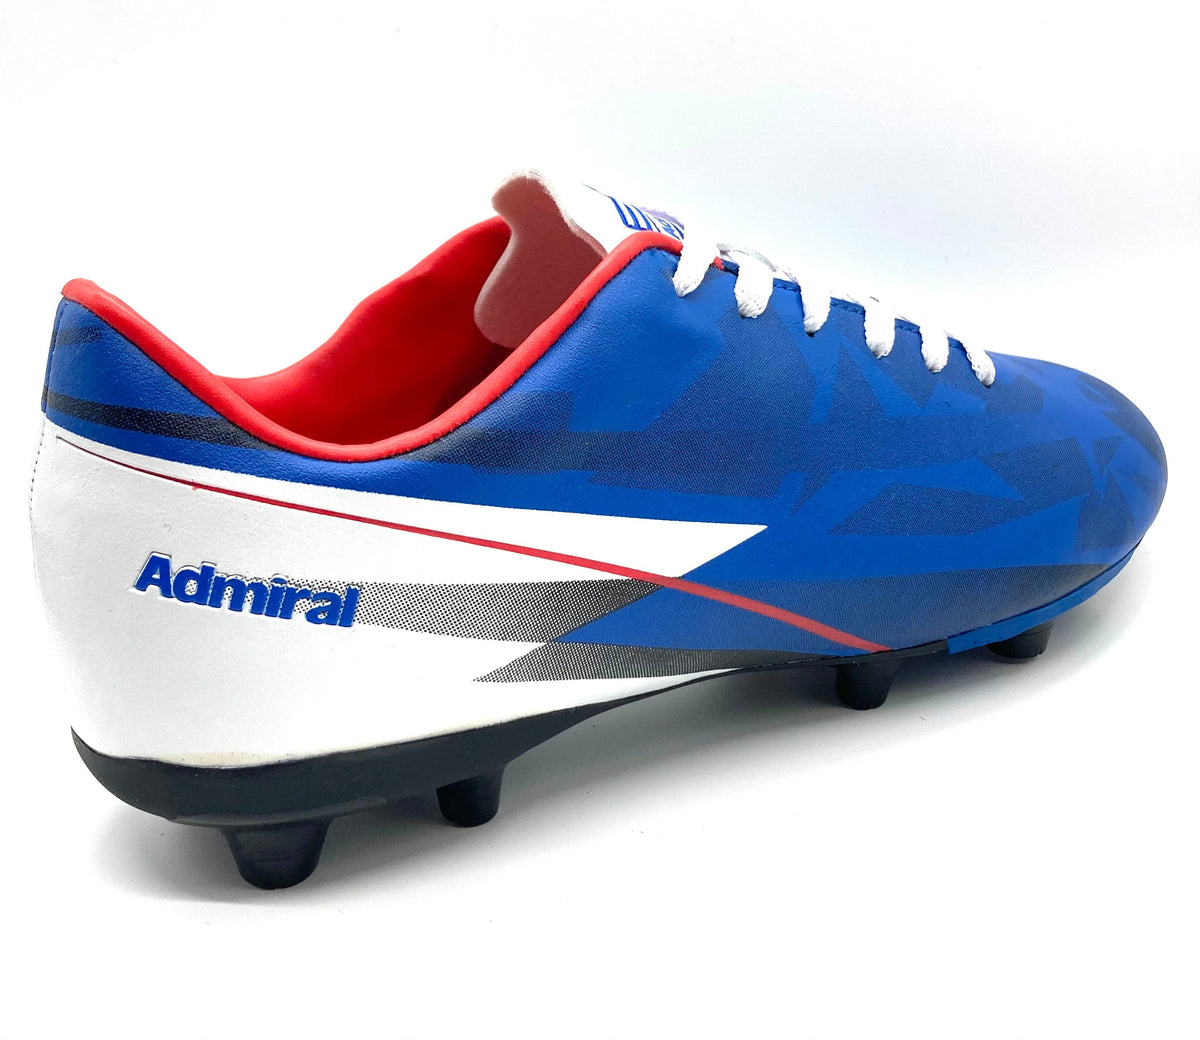 ADMIRAL Football Boots - Pulz Gordon - White Blue Mix